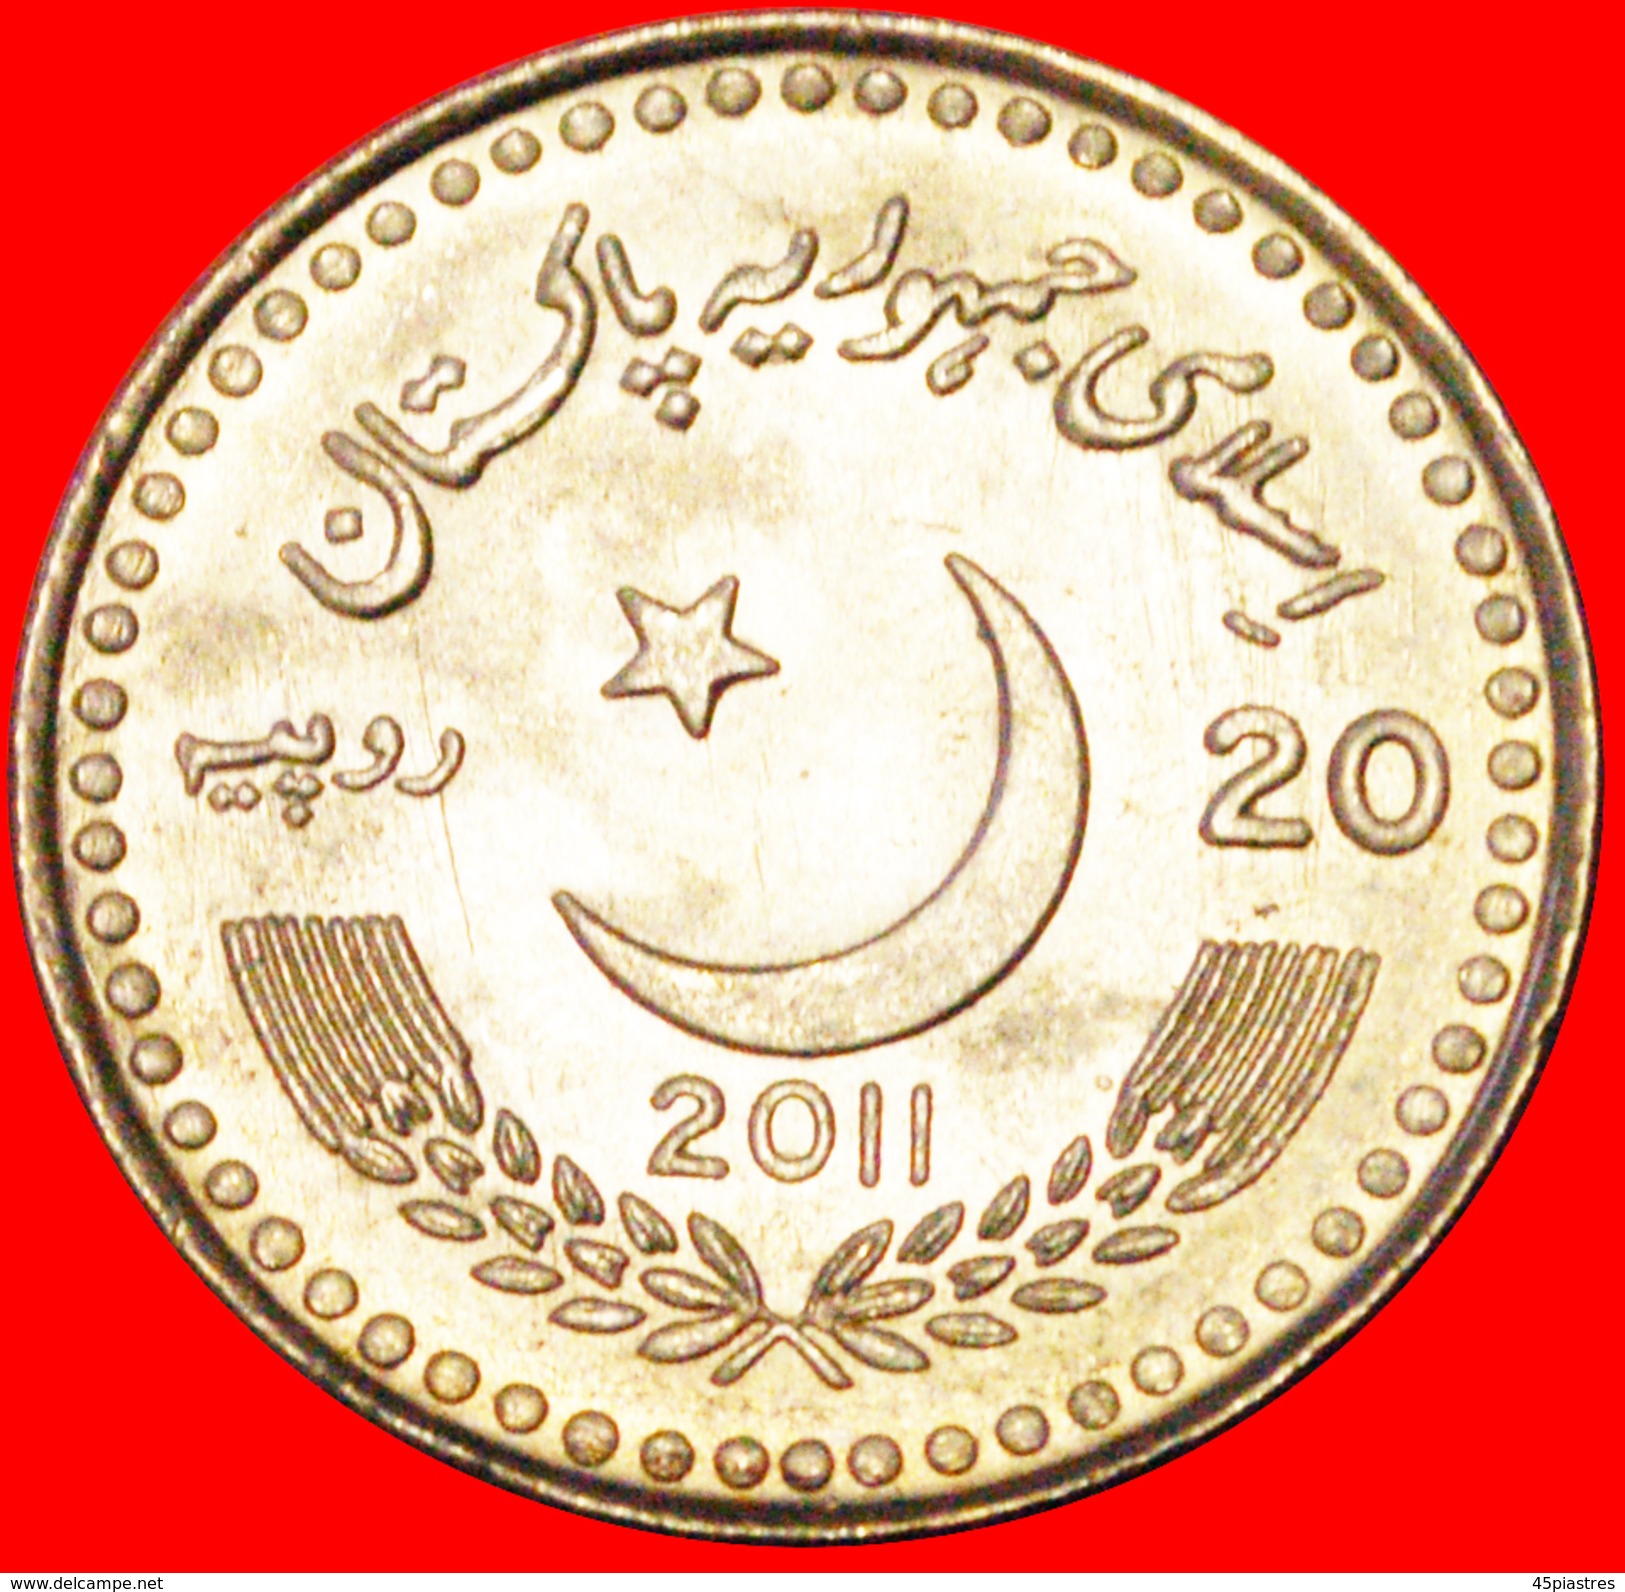 § CHINA 1951: PAKISTAN &#x2605; 20 RUPEES 2011 UNC MINT LUSTER! LOW START &#x2605; NO RESERVE! - Pakistan